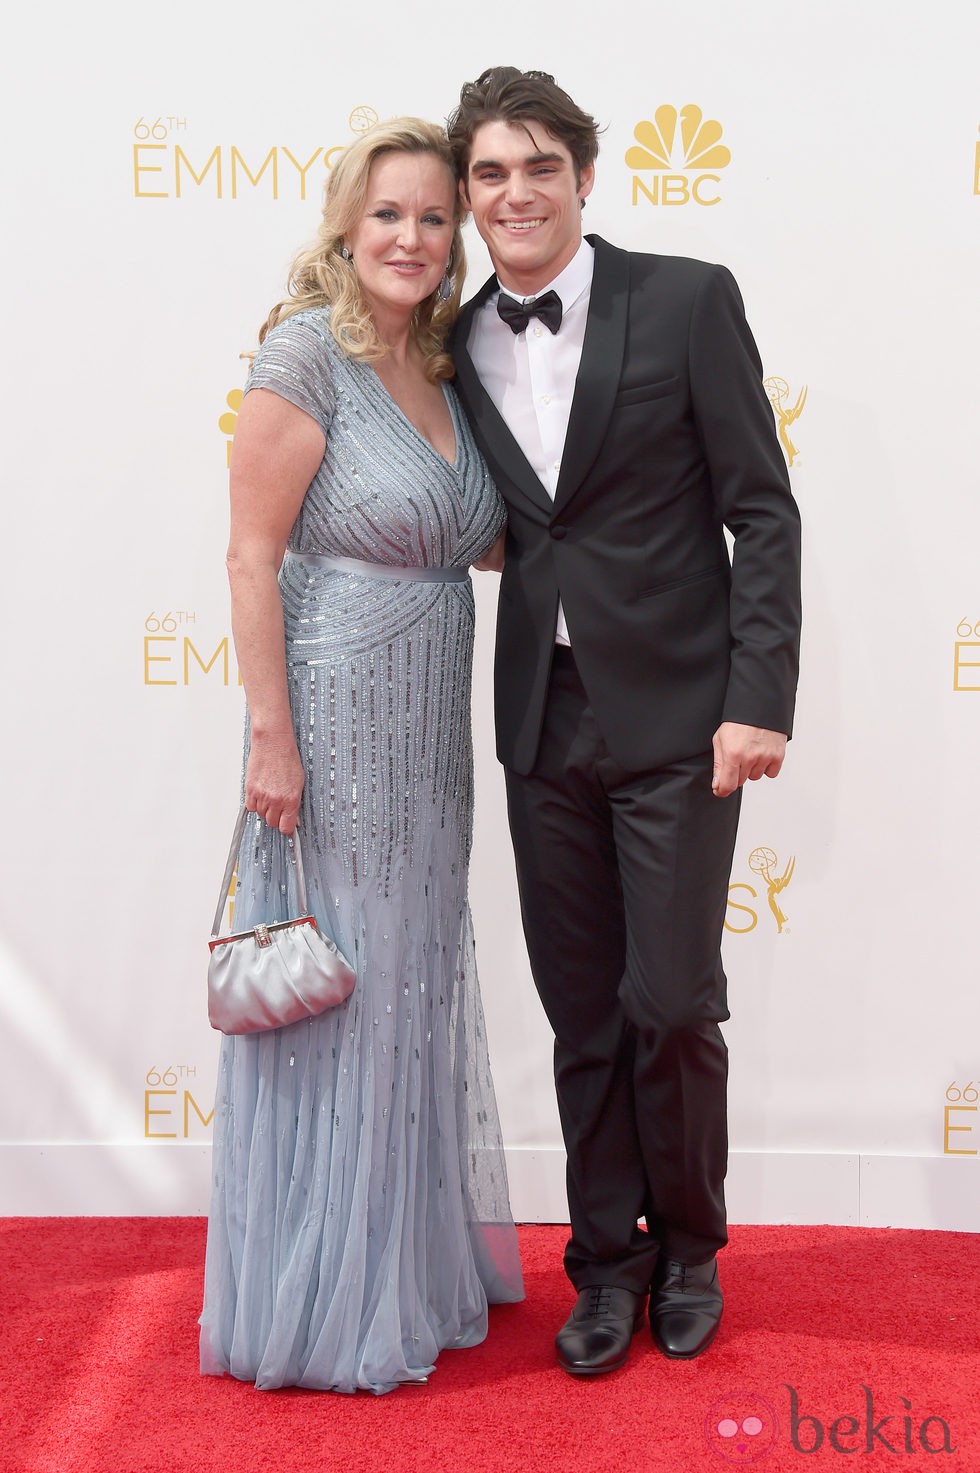 RJ Mitte en los Premios Emmy 2014